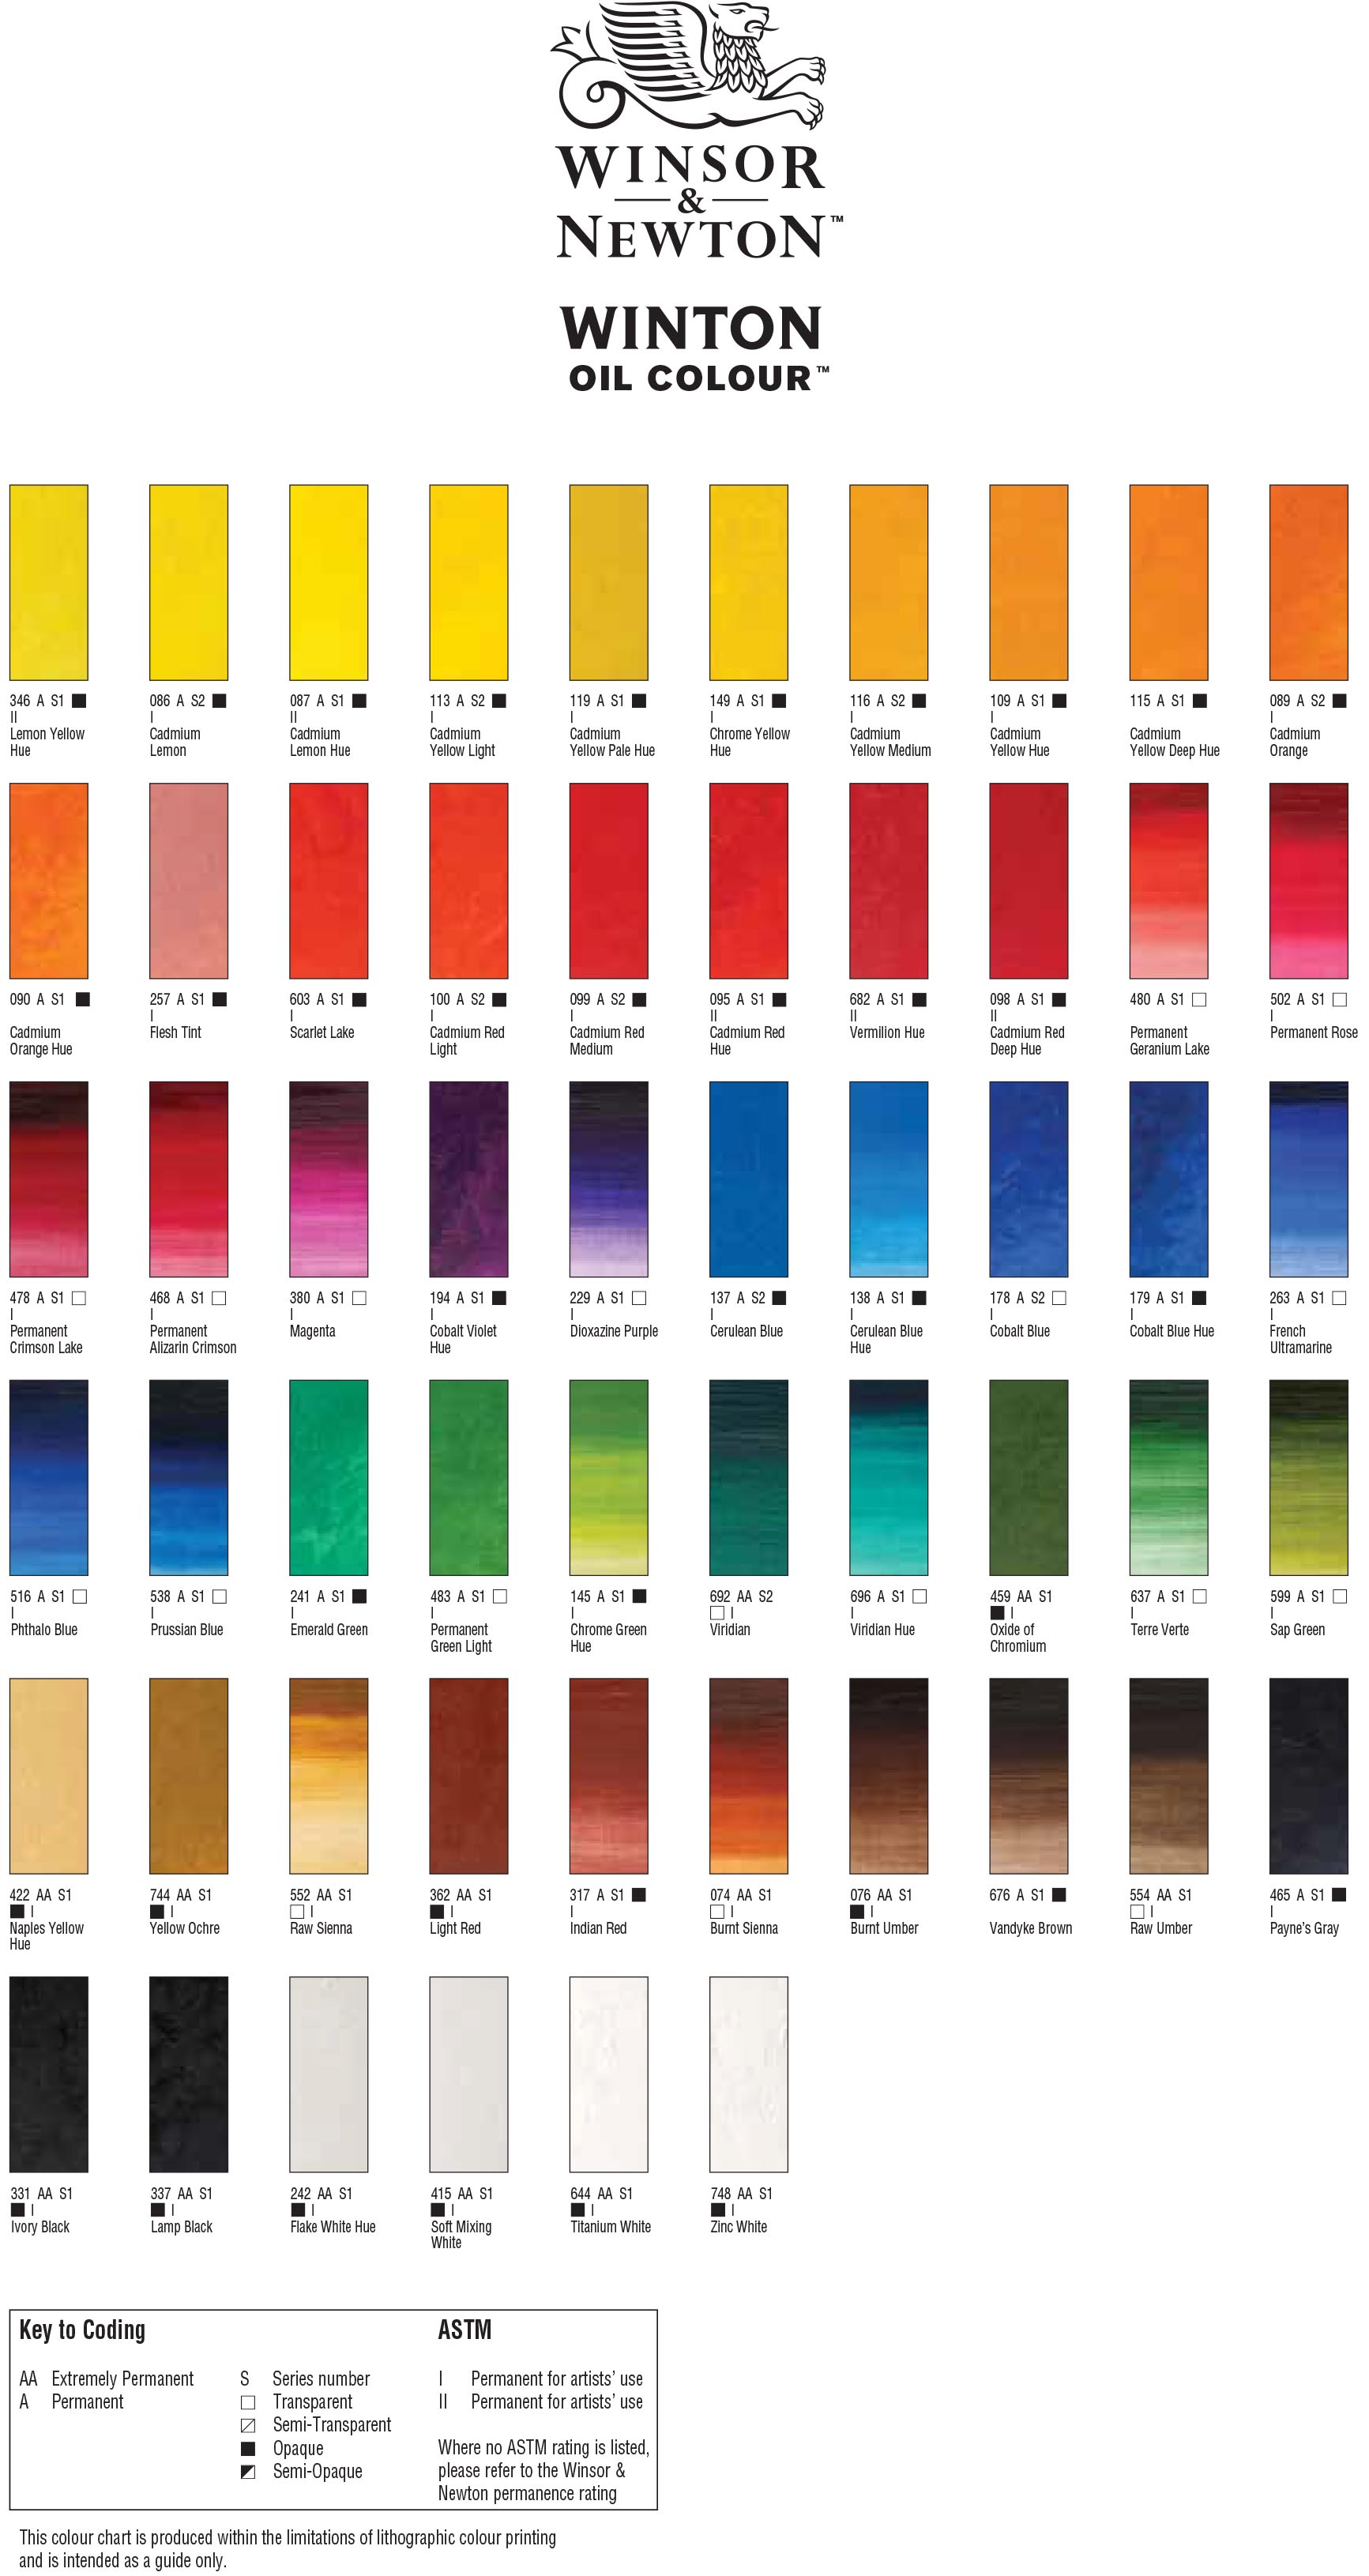 Colour Chart for Winsor & Newton Winton Oil Colour